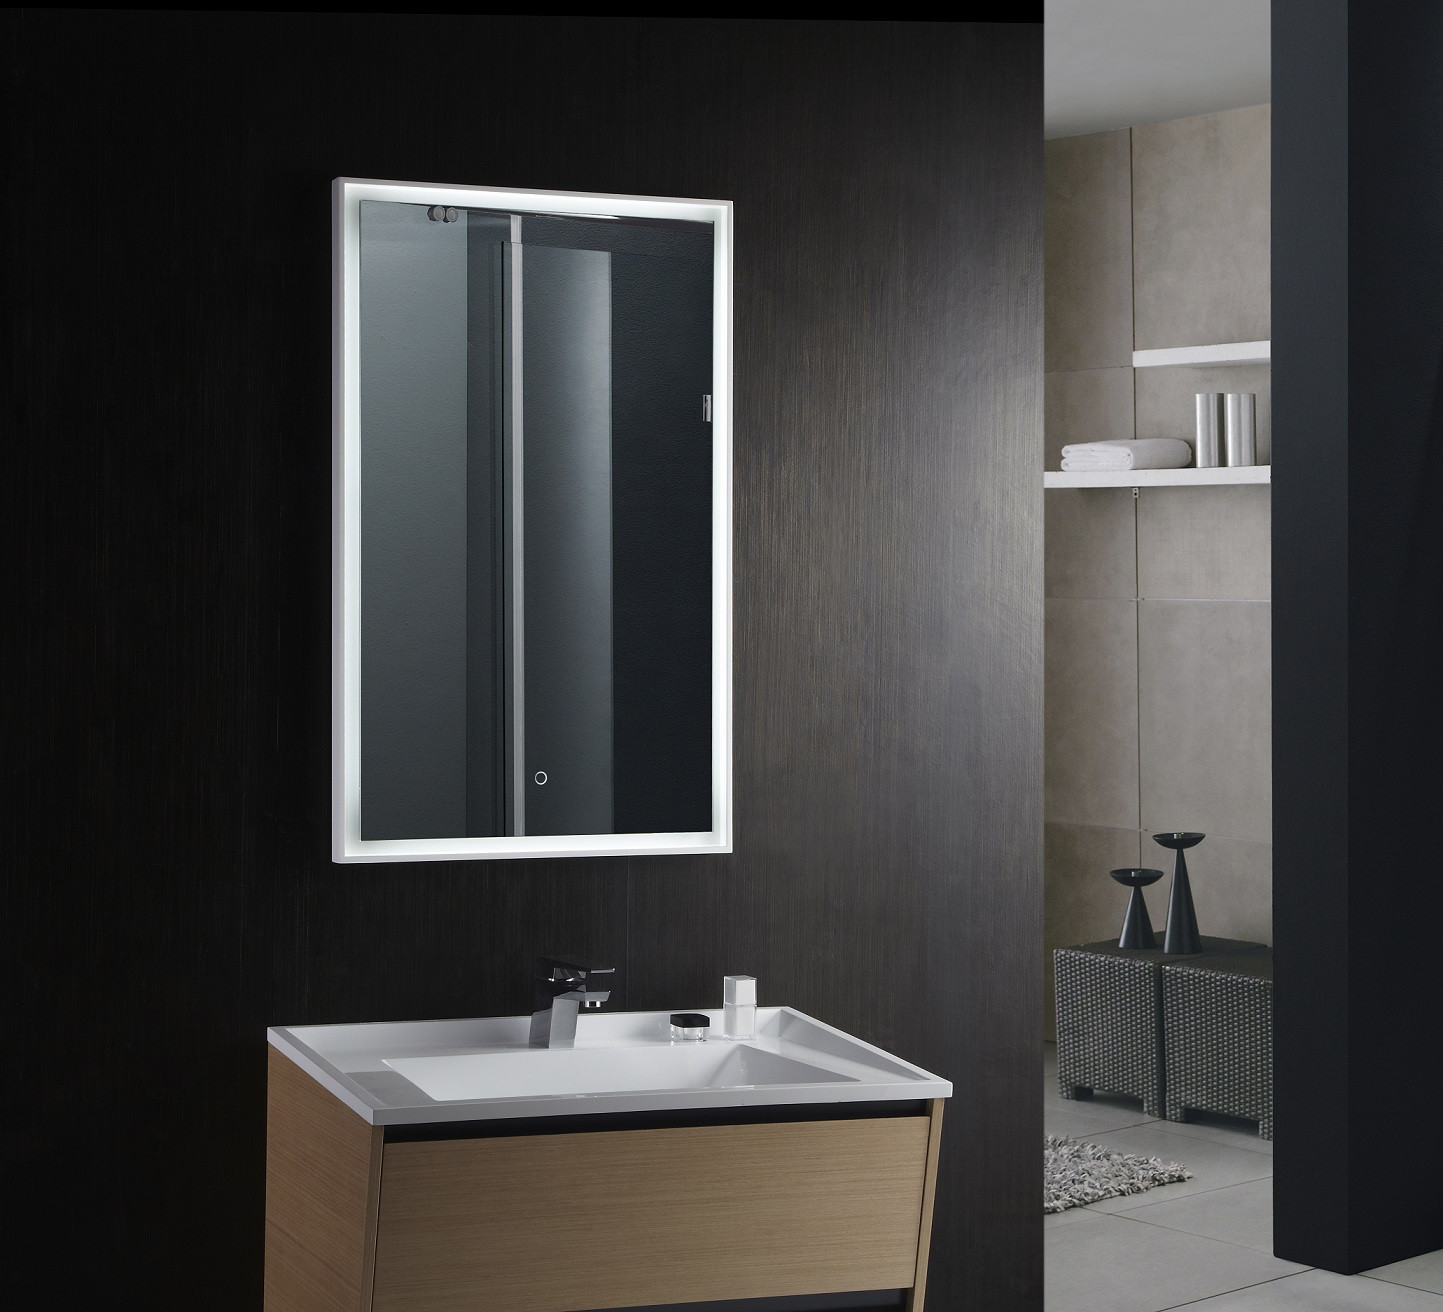 Lighted Mirrors For Bathroom
 Fiori Lighted Vanity Mirror LED Bathroom Mirror